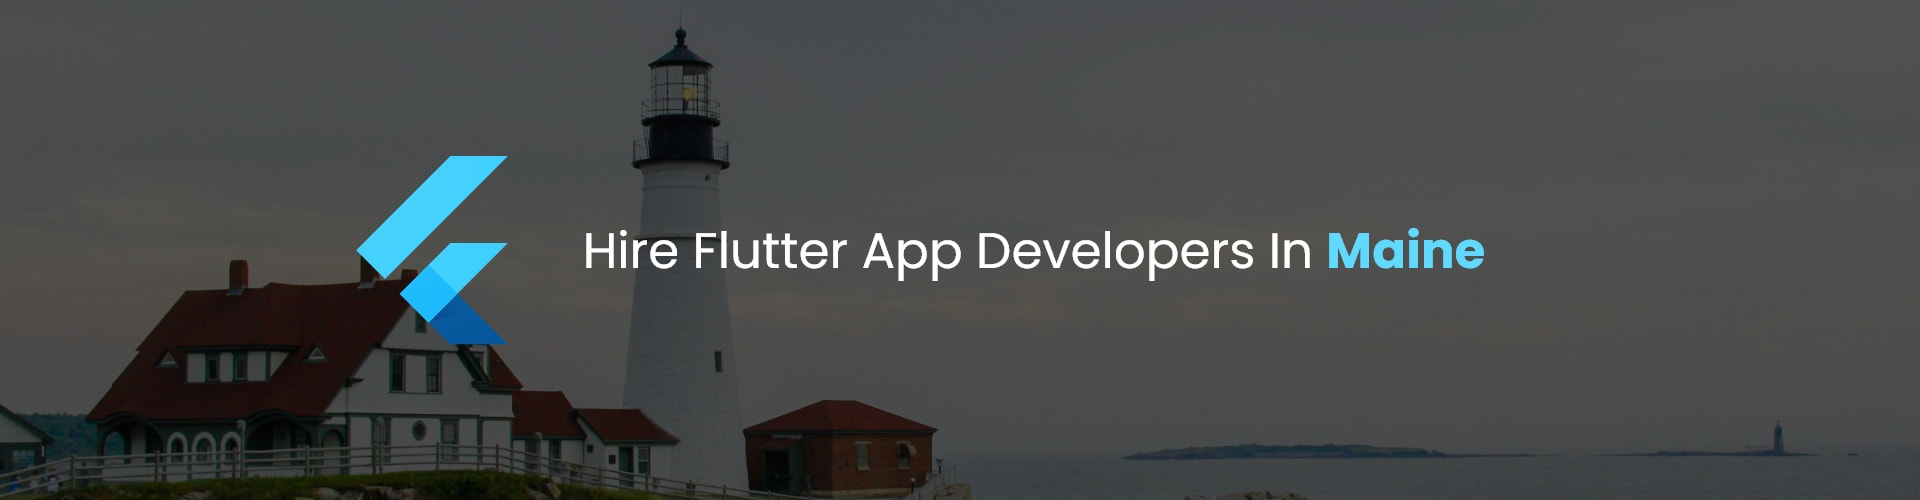 flutter app developers in maine